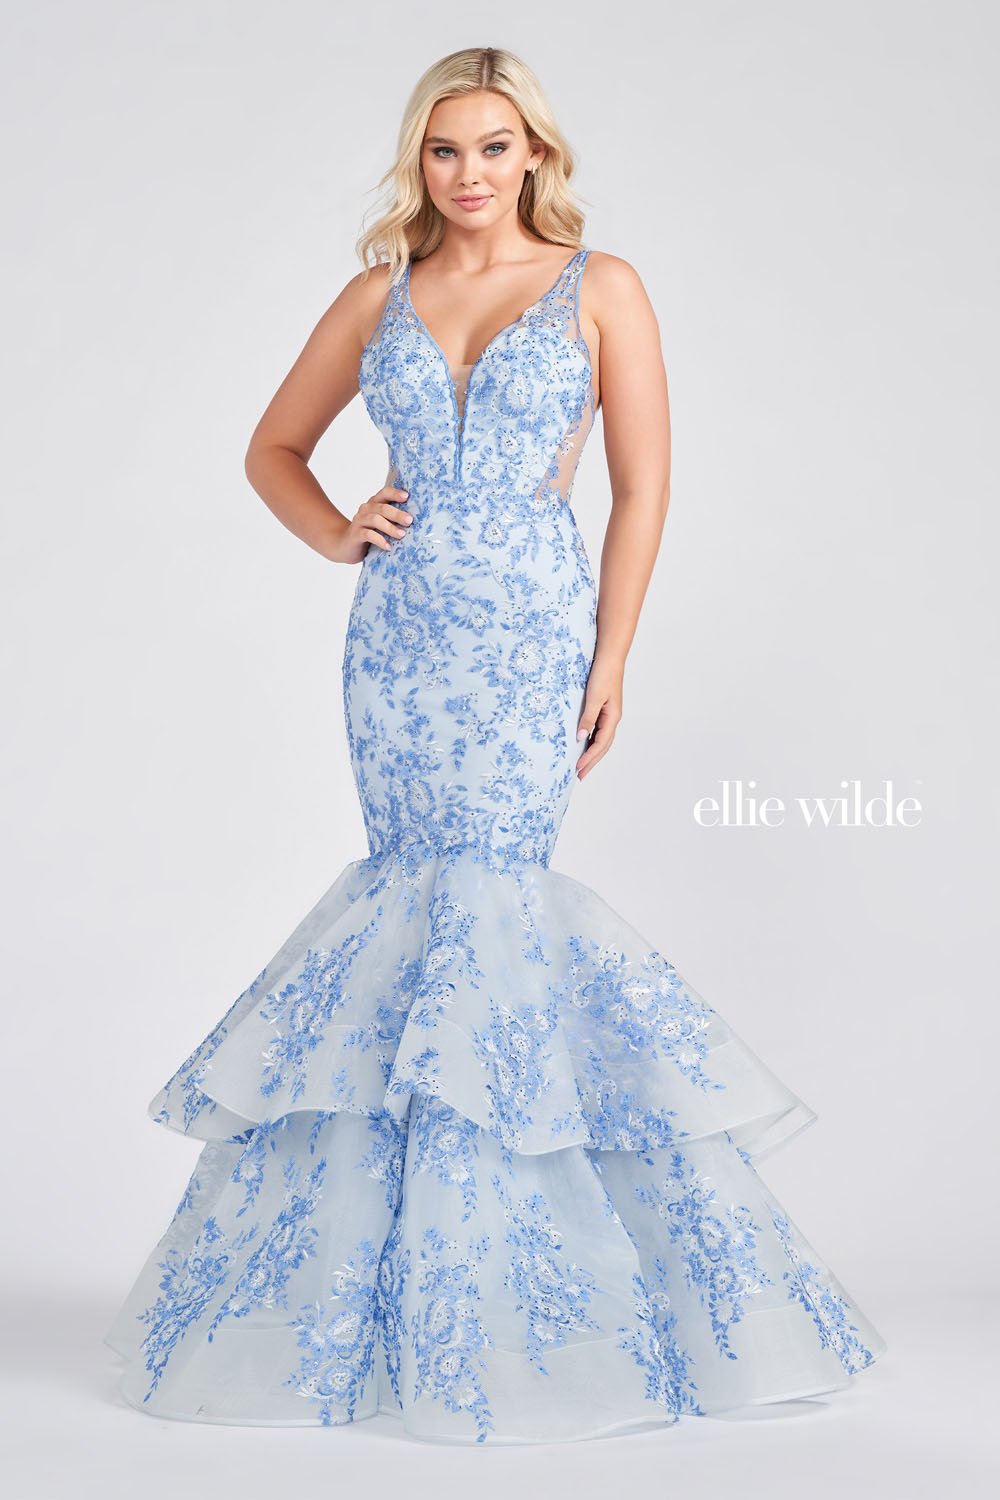 Ellie Wilde Sky Blue EW122040 Prom Dress Image.  Sky Blue formal dress.